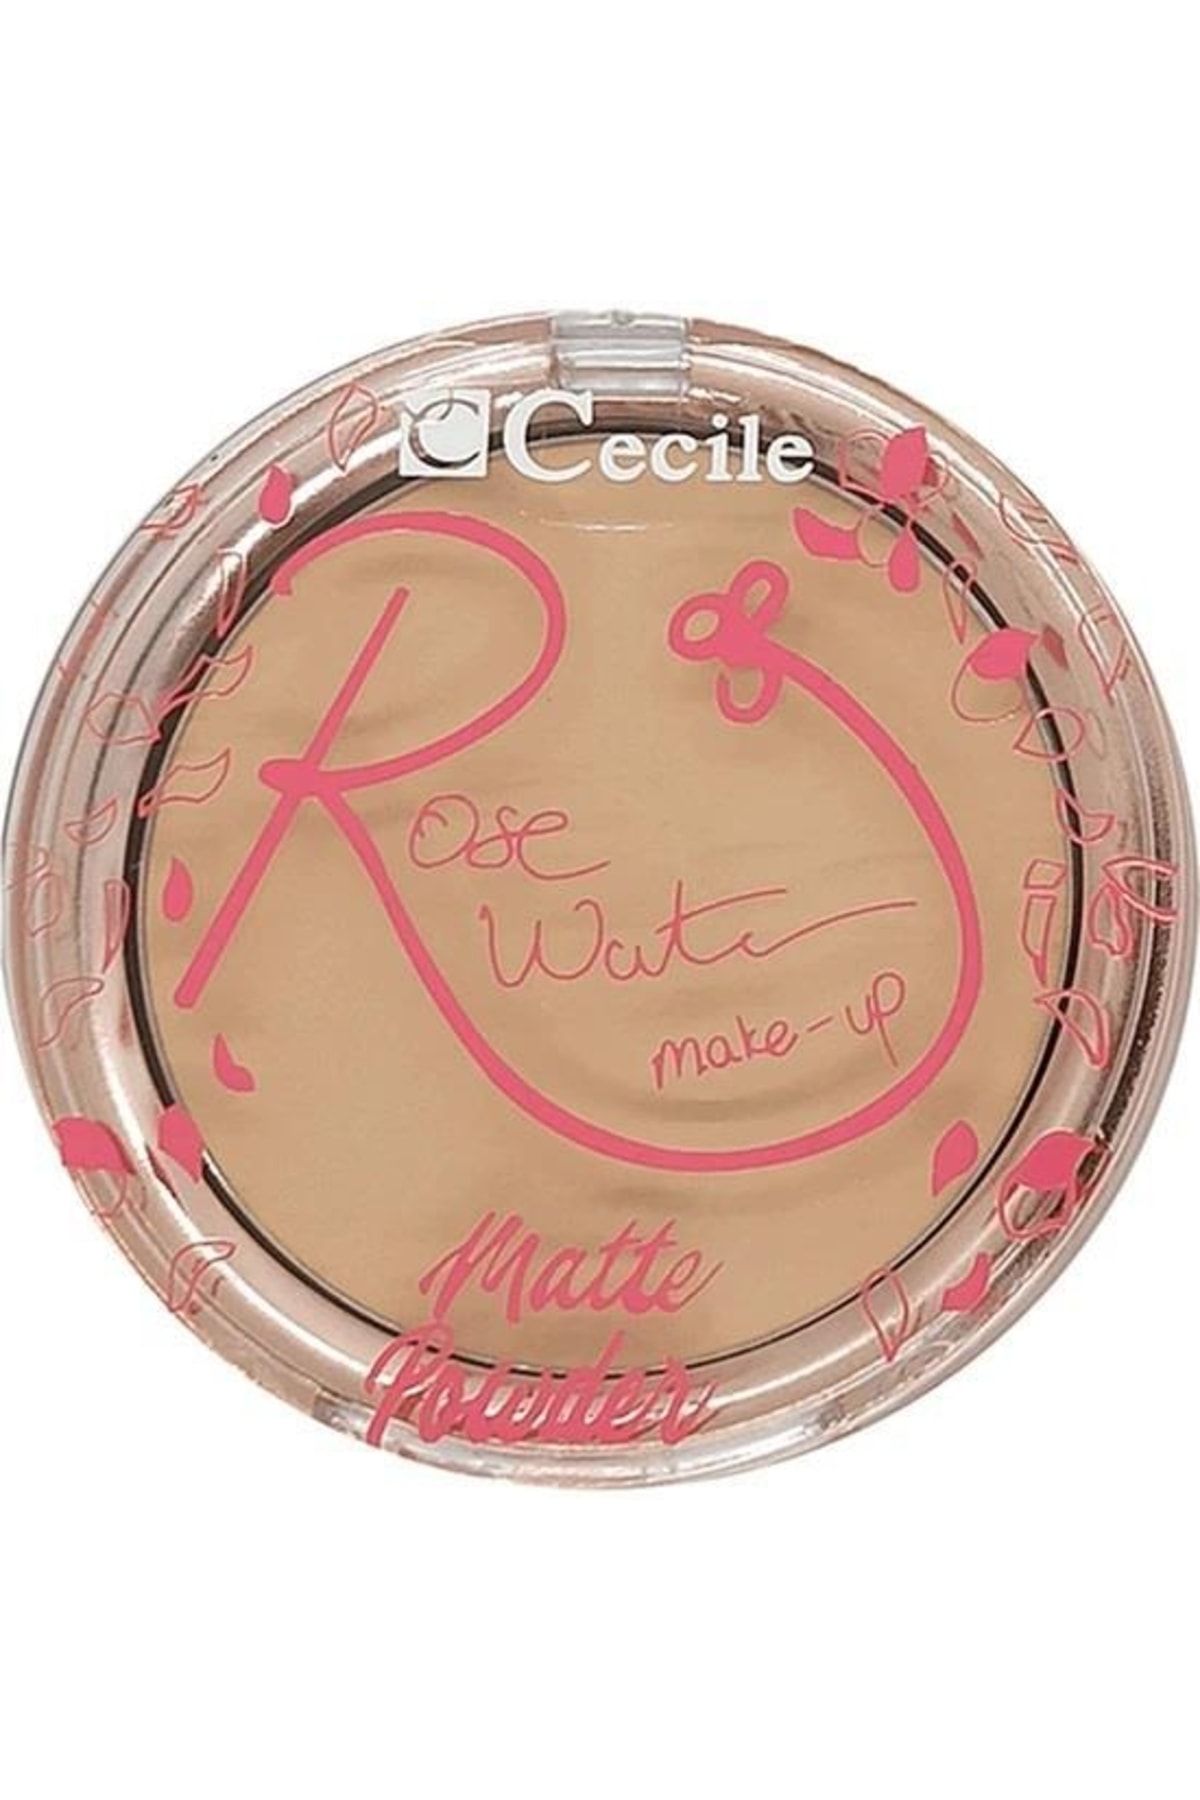 Cecile Rose Water Matte Powder Pudra 02